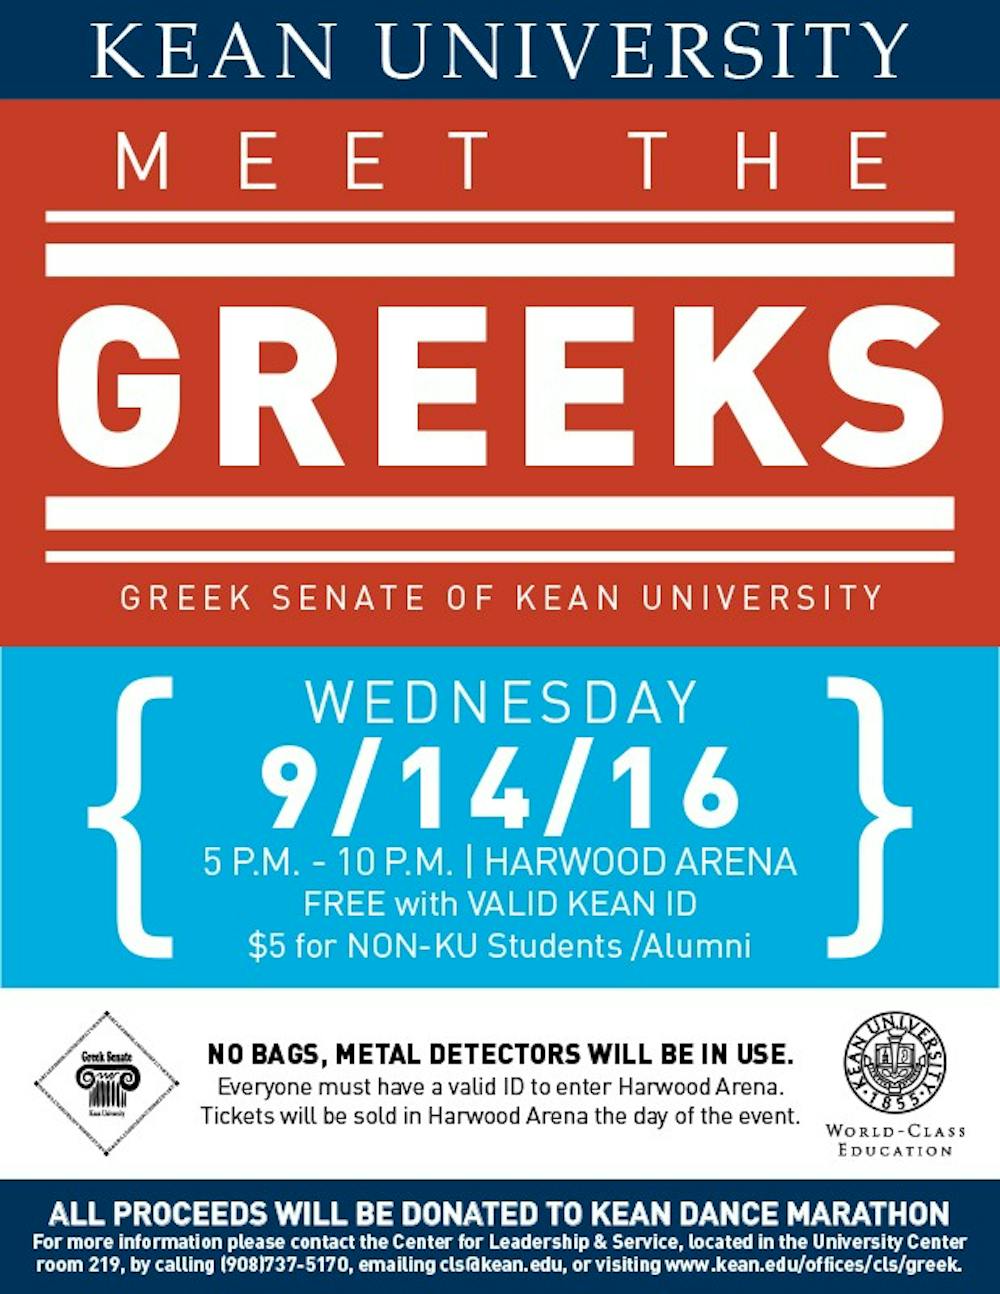 Meet Your Kean University Greeks